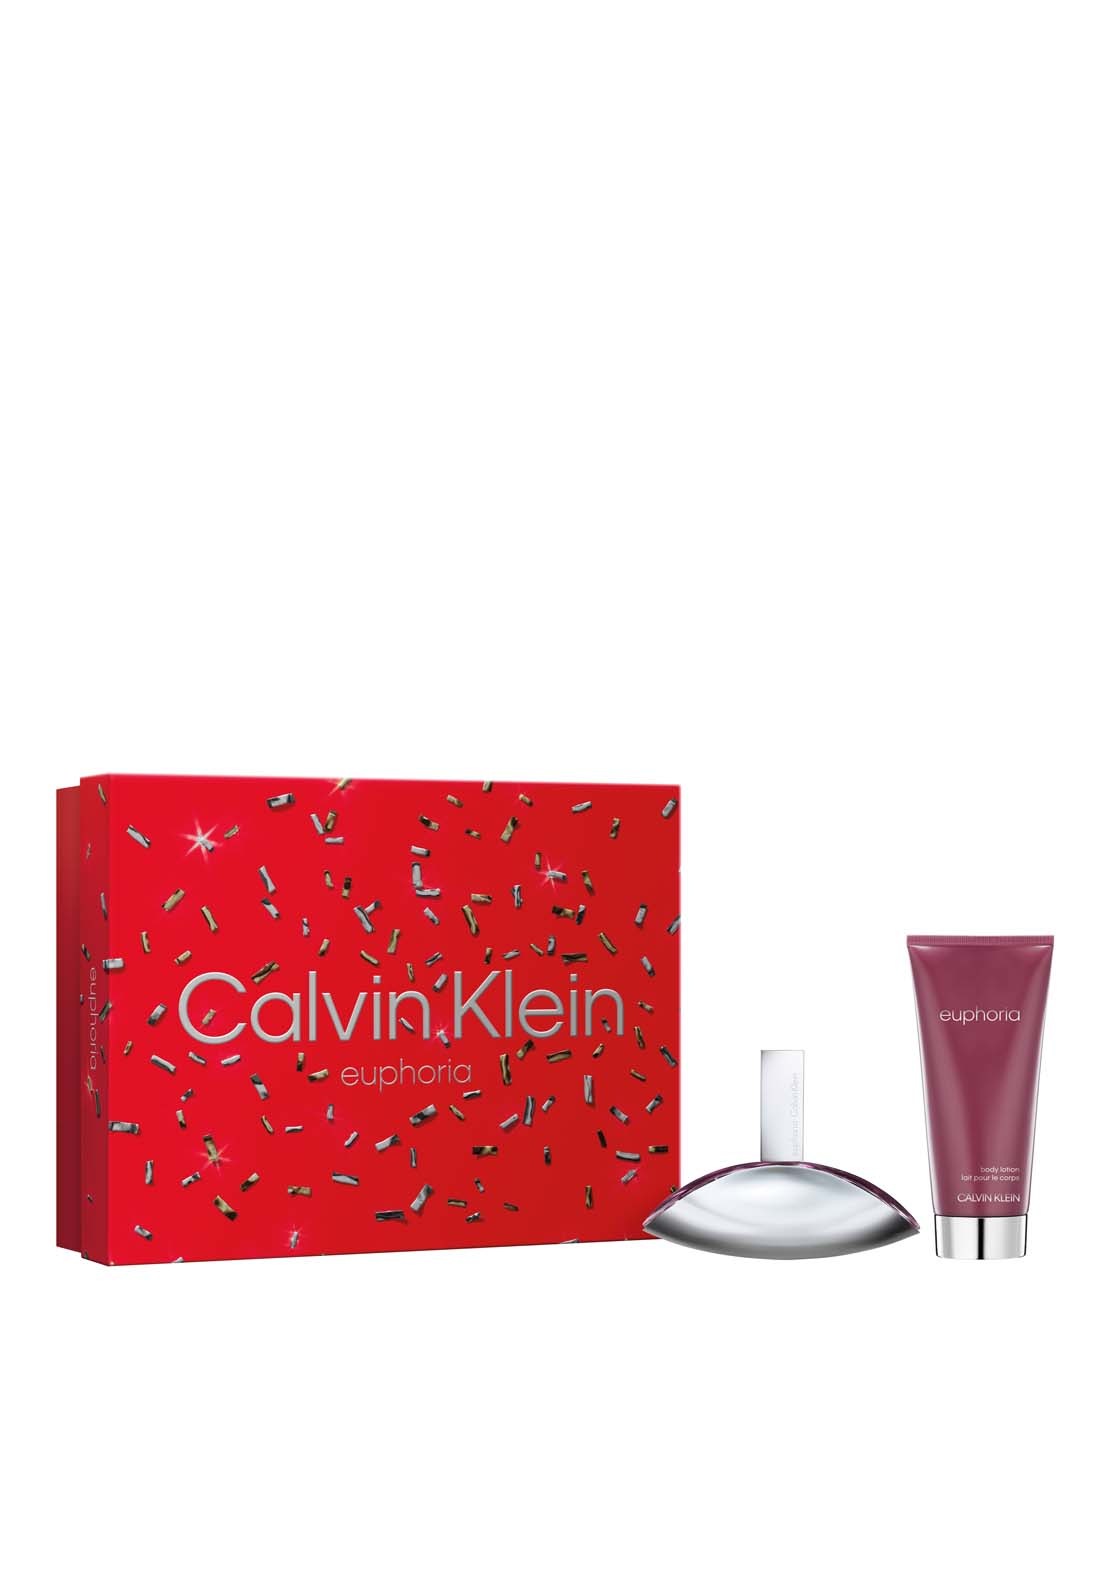 Calvin Klein Euphoria For Her Eau de Parfum 50ml Giftset 1 Shaws Department Stores